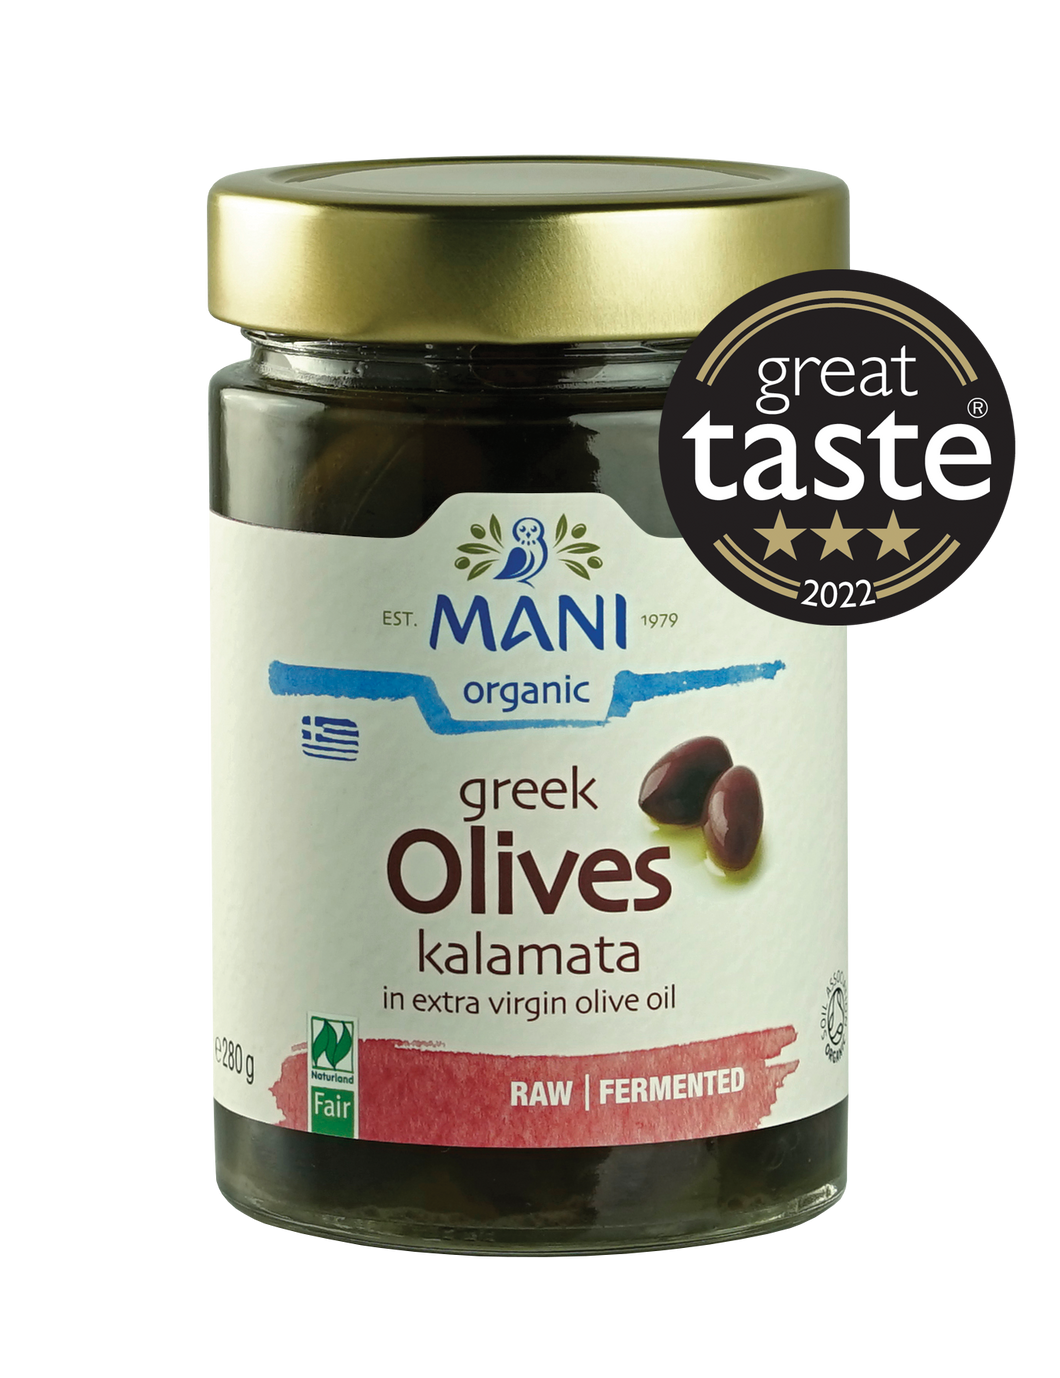 Organic Kalamata Olives in Extra Virgin Olive Oil